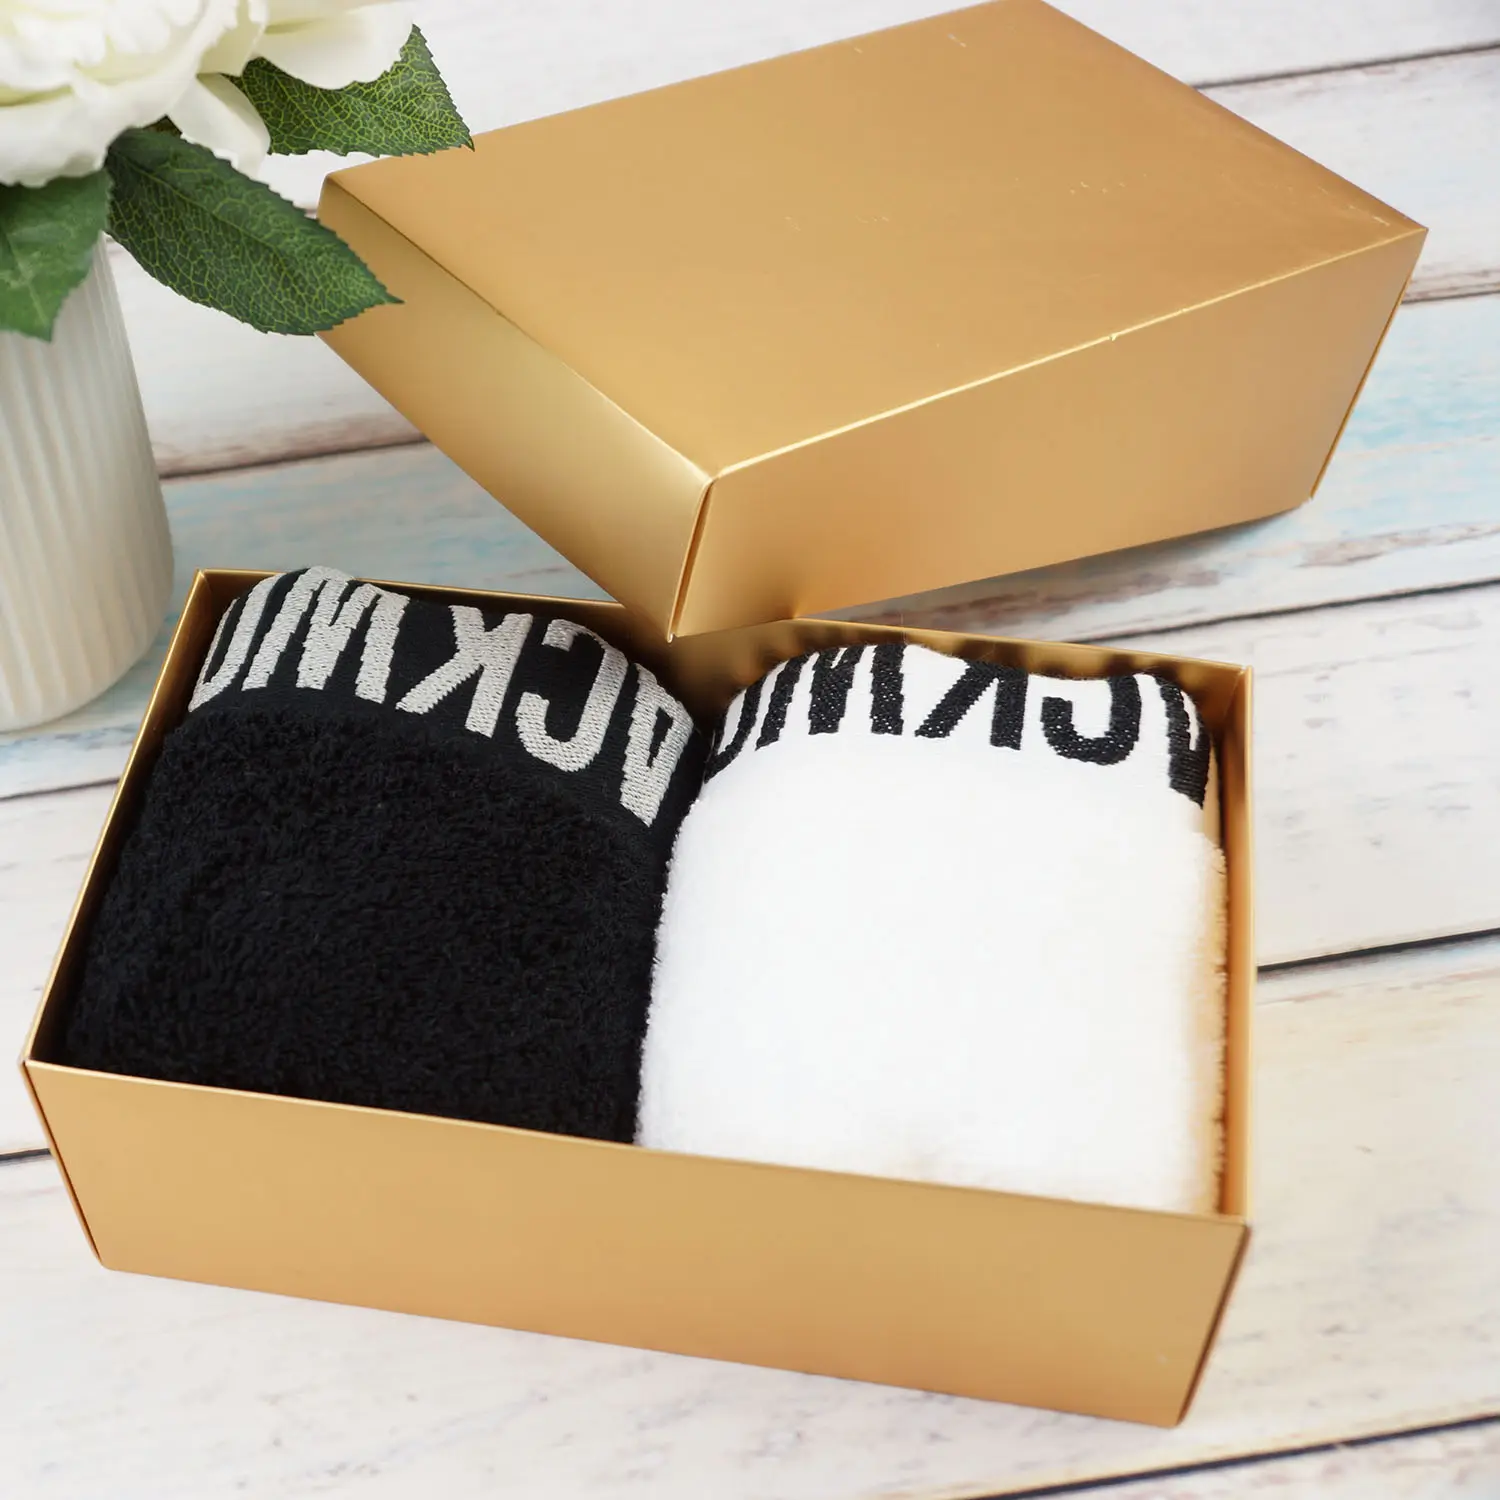 Gift towel set 2017 fancy embossed logo towels set in gift box